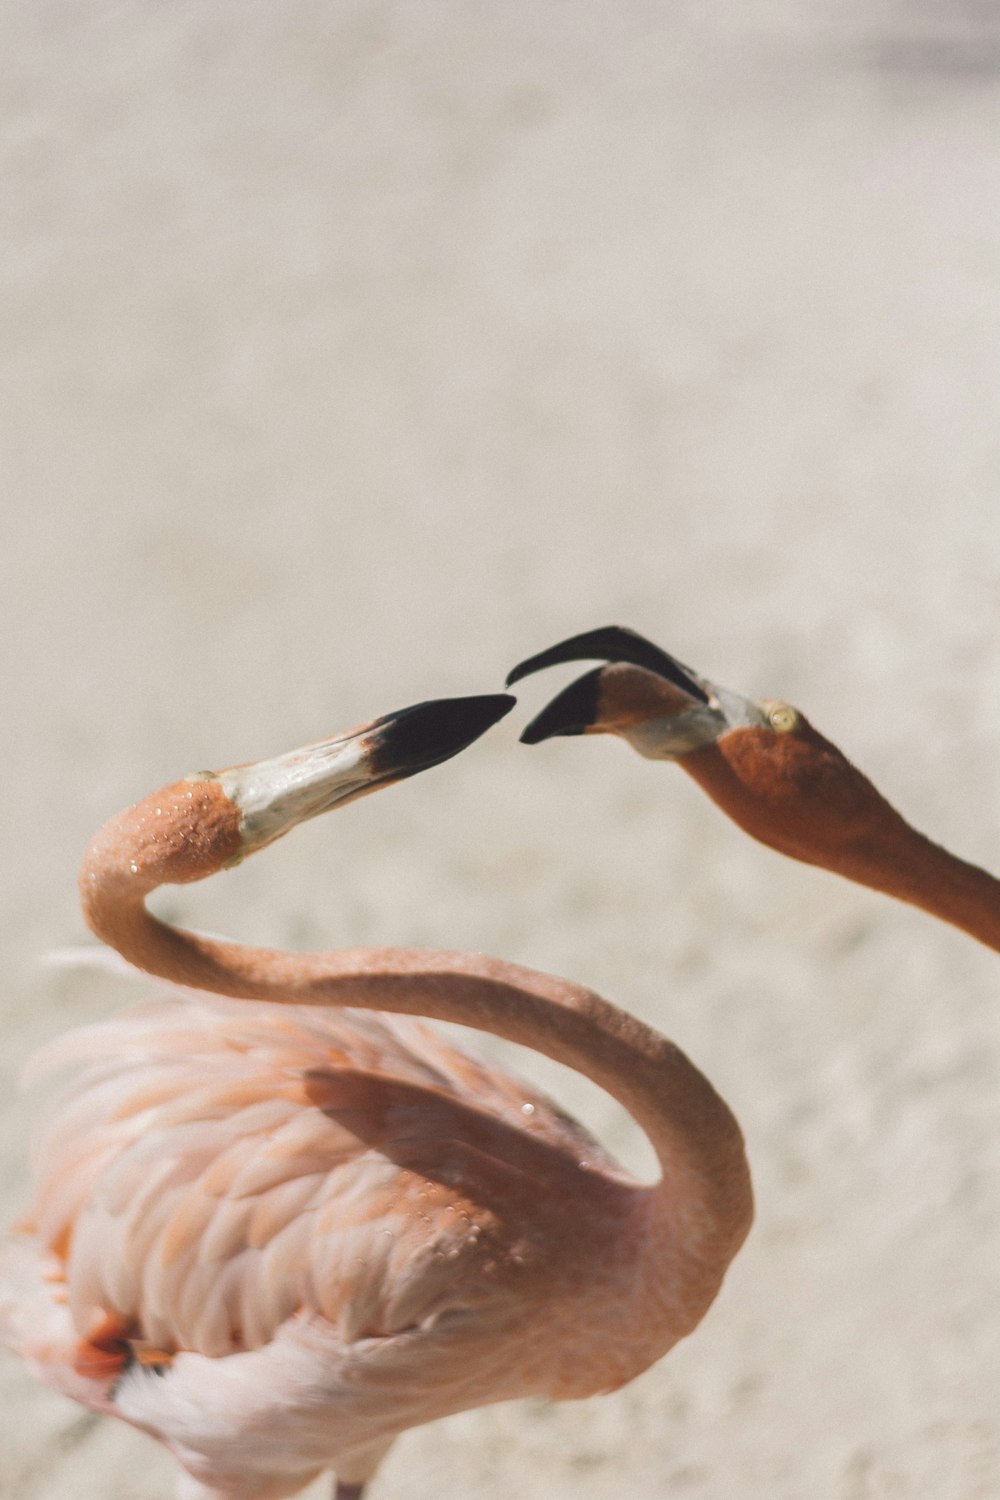 a pink flamingo standing on a sandy beach